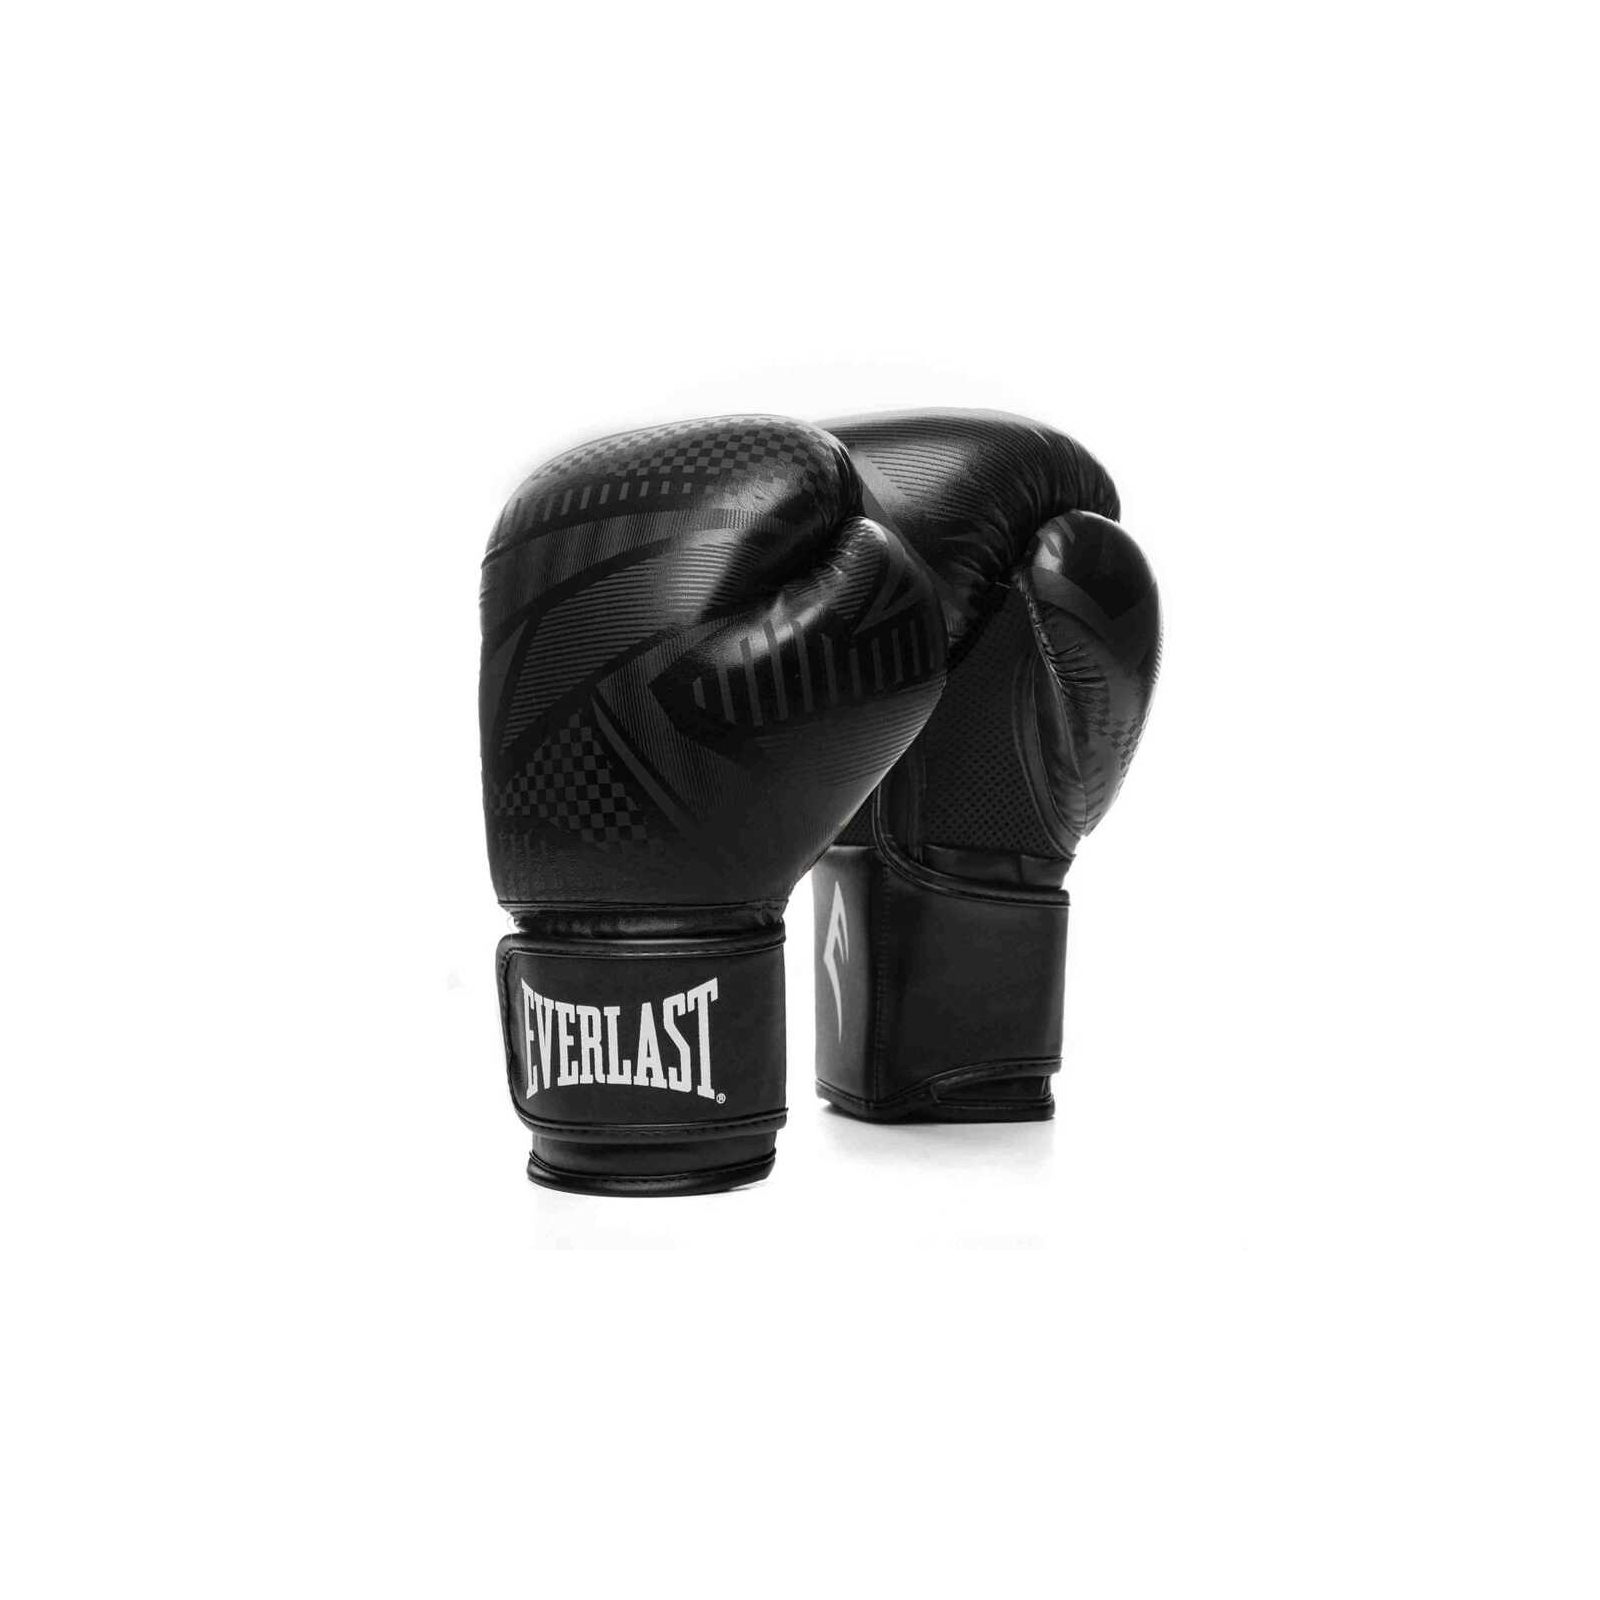 Боксерські рукавички Everlast Spark Training Gloves 870930-70-816 чорний 16 oz (009283609450)